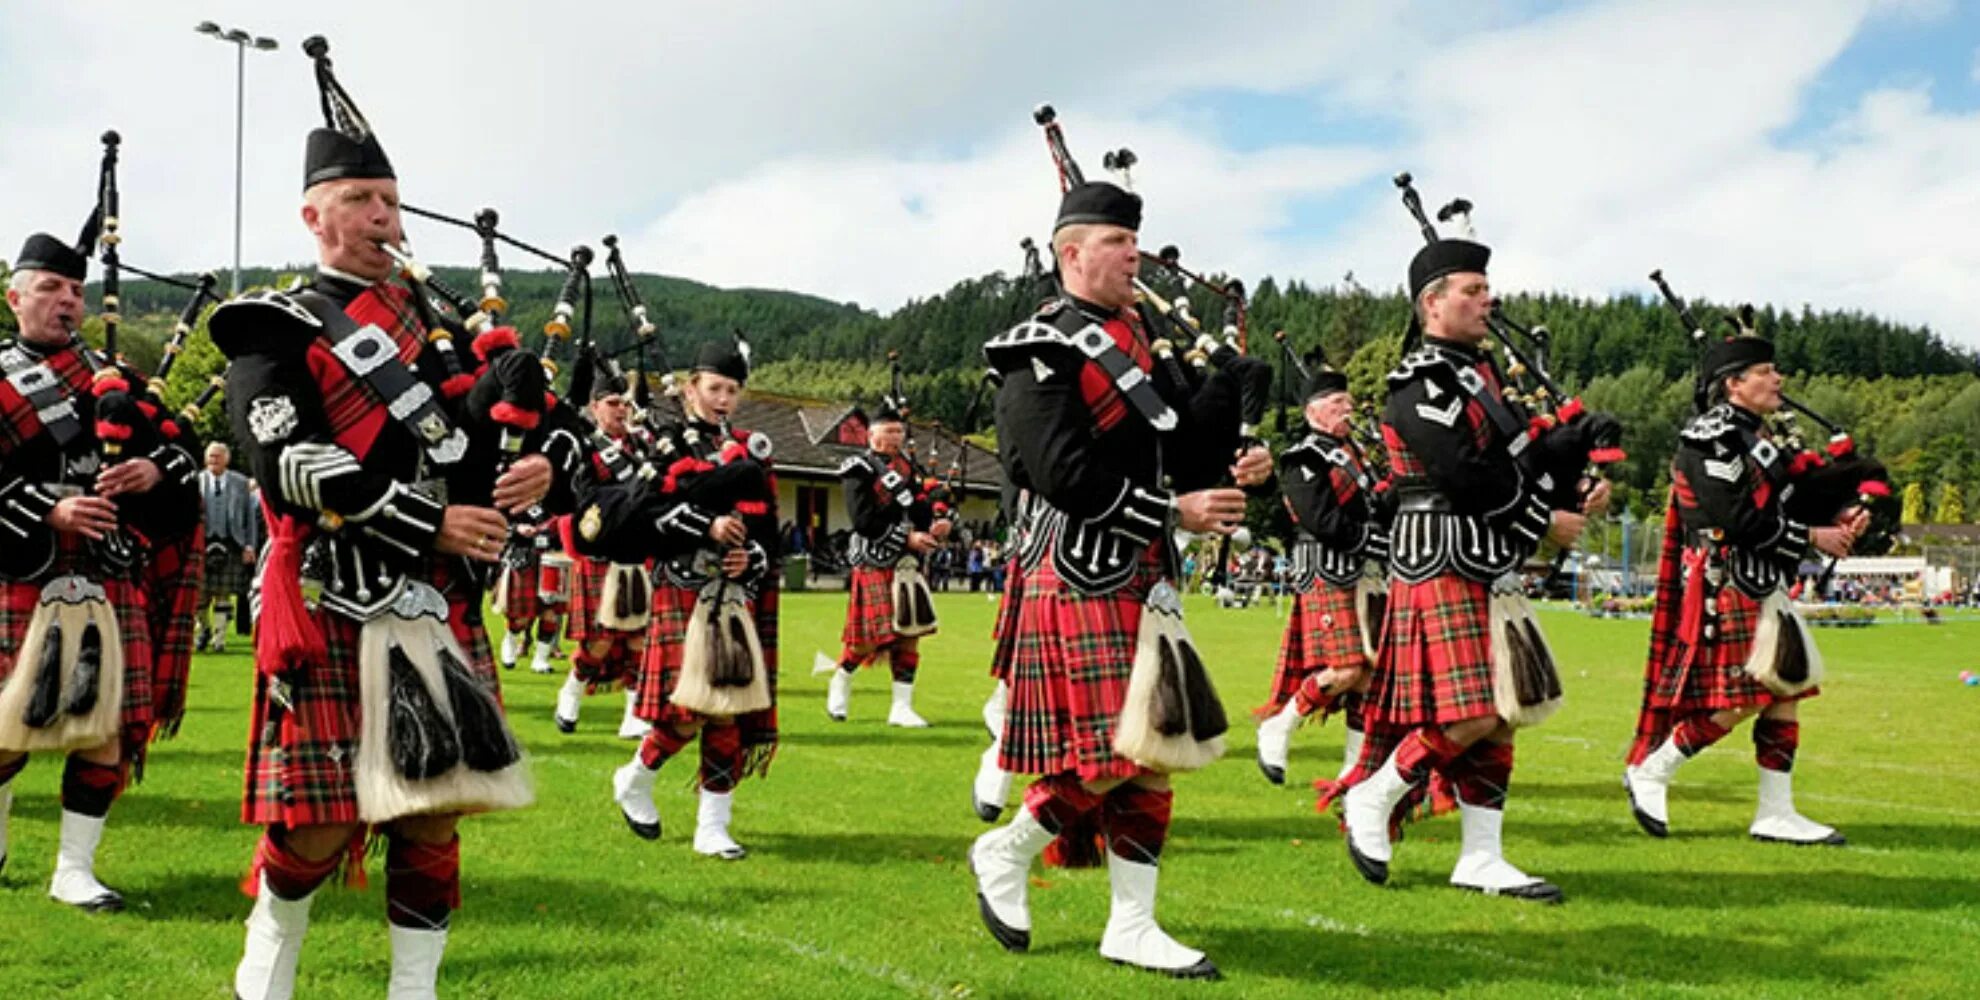 People live in scotland. Highland Шотландия Шотландия. Шотландские Горские игры. Королева килт Шотландия. Волынщики Шотландии.